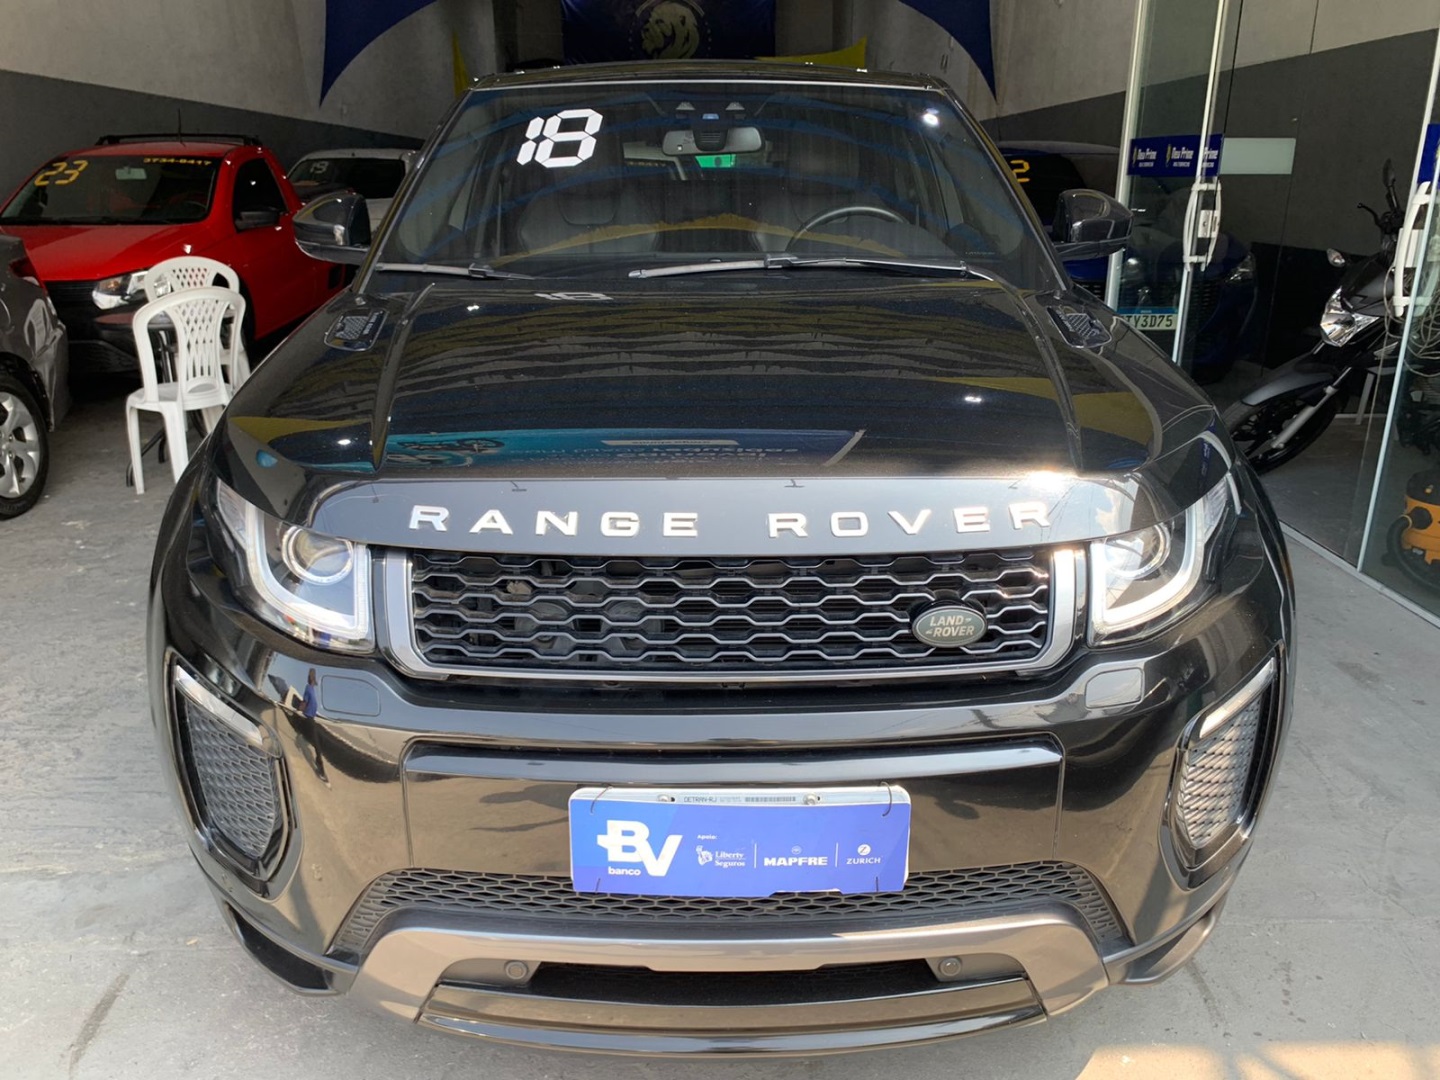 LAND ROVER RANGE ROVER EVOQUE 2.0 SE 4WD 16V FLEX 4P AUTOMÁTICO